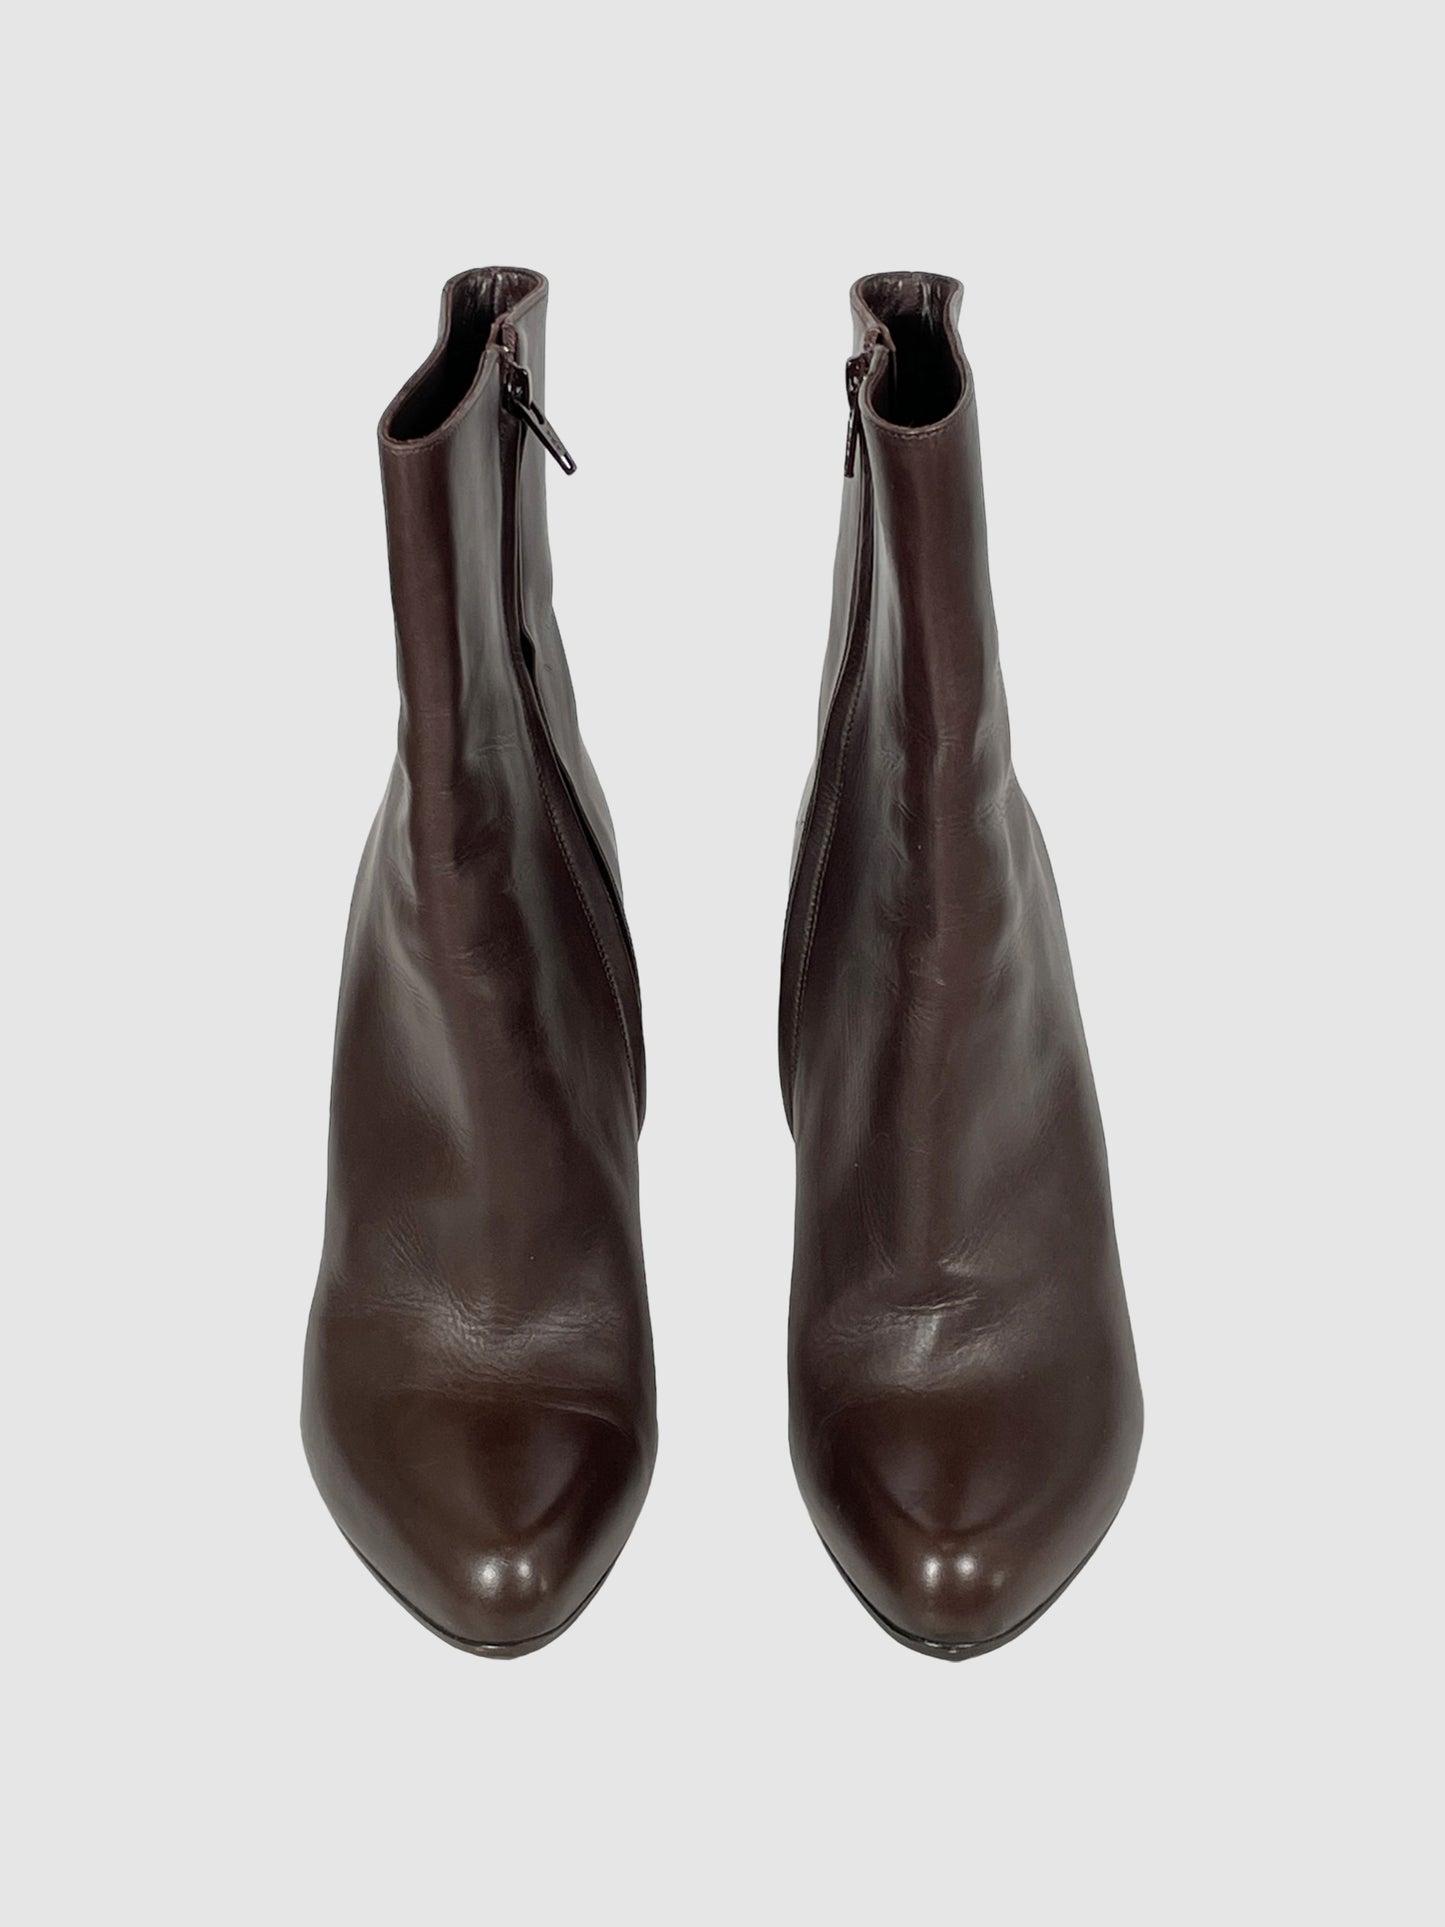 Christian Louboutin Leather Stiletto Boots - Size 40